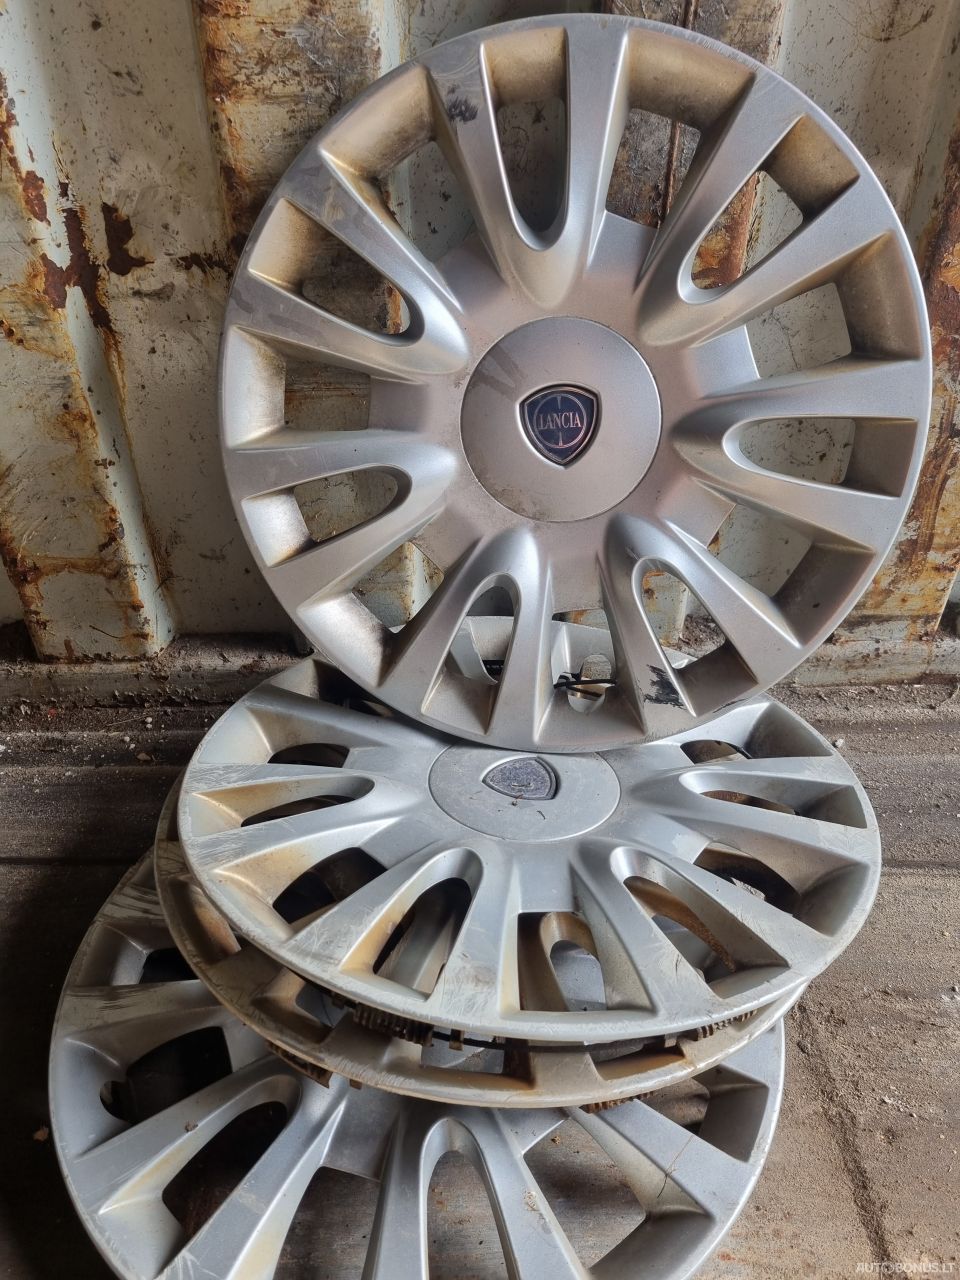  Lancia wheel caps rims